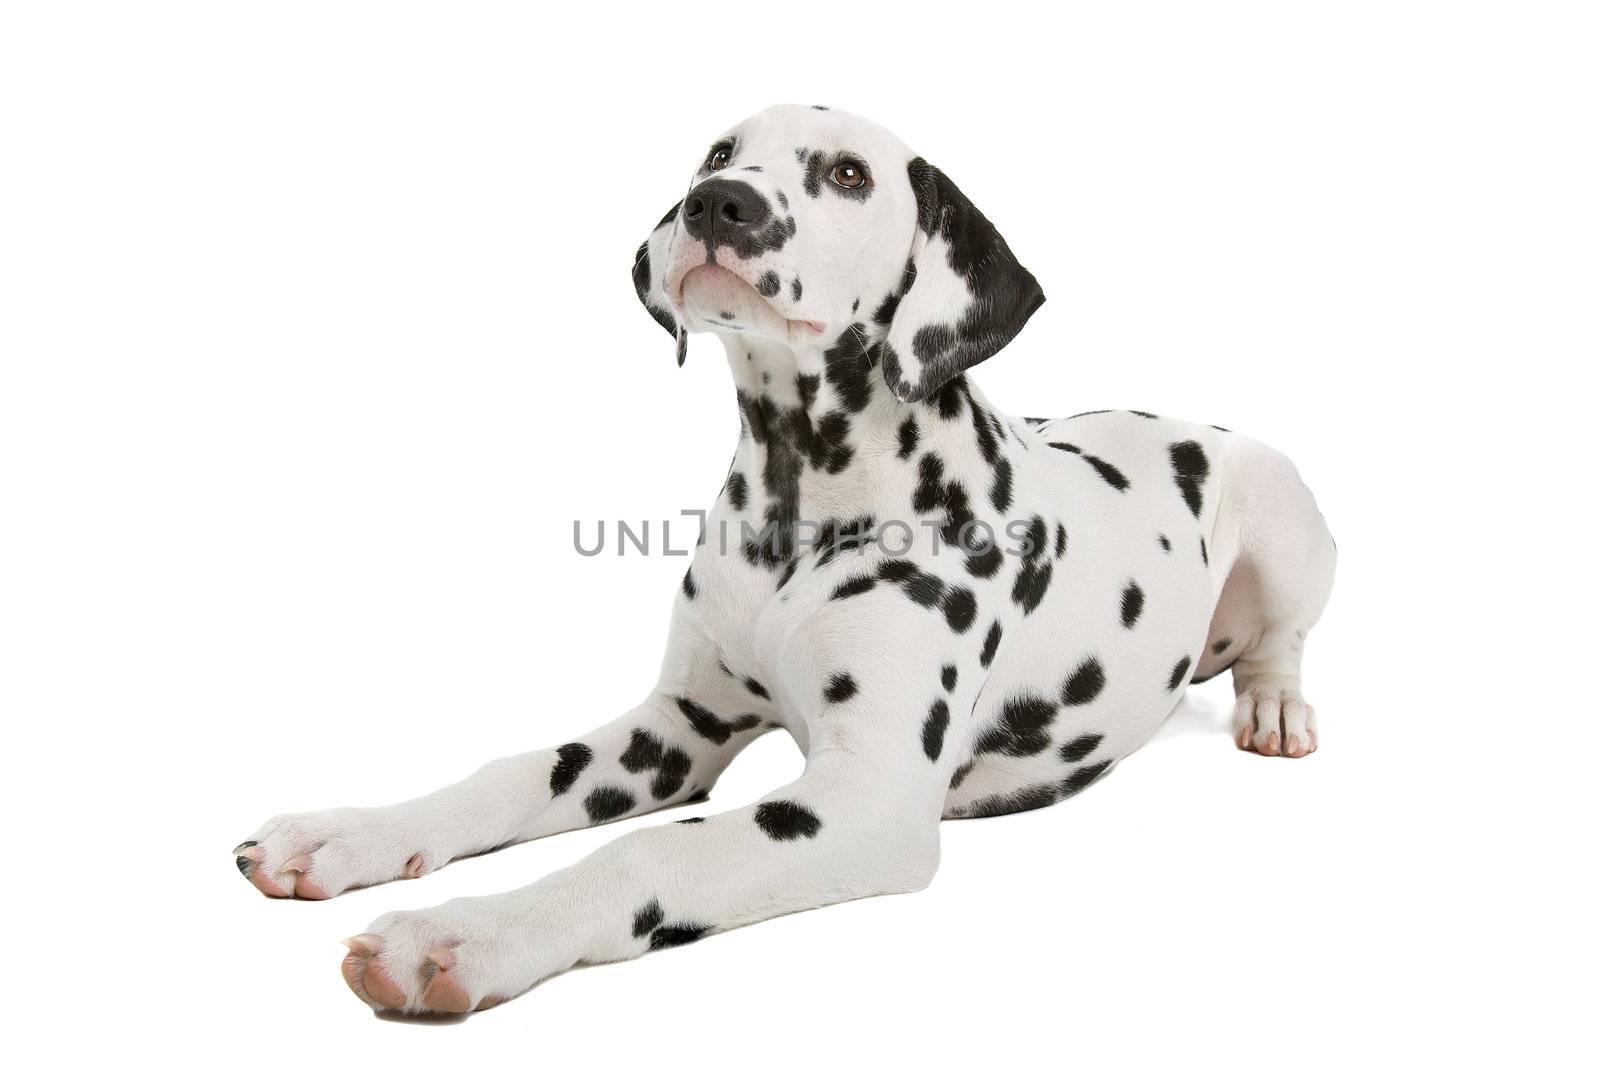 Dalmatian puppy by eriklam